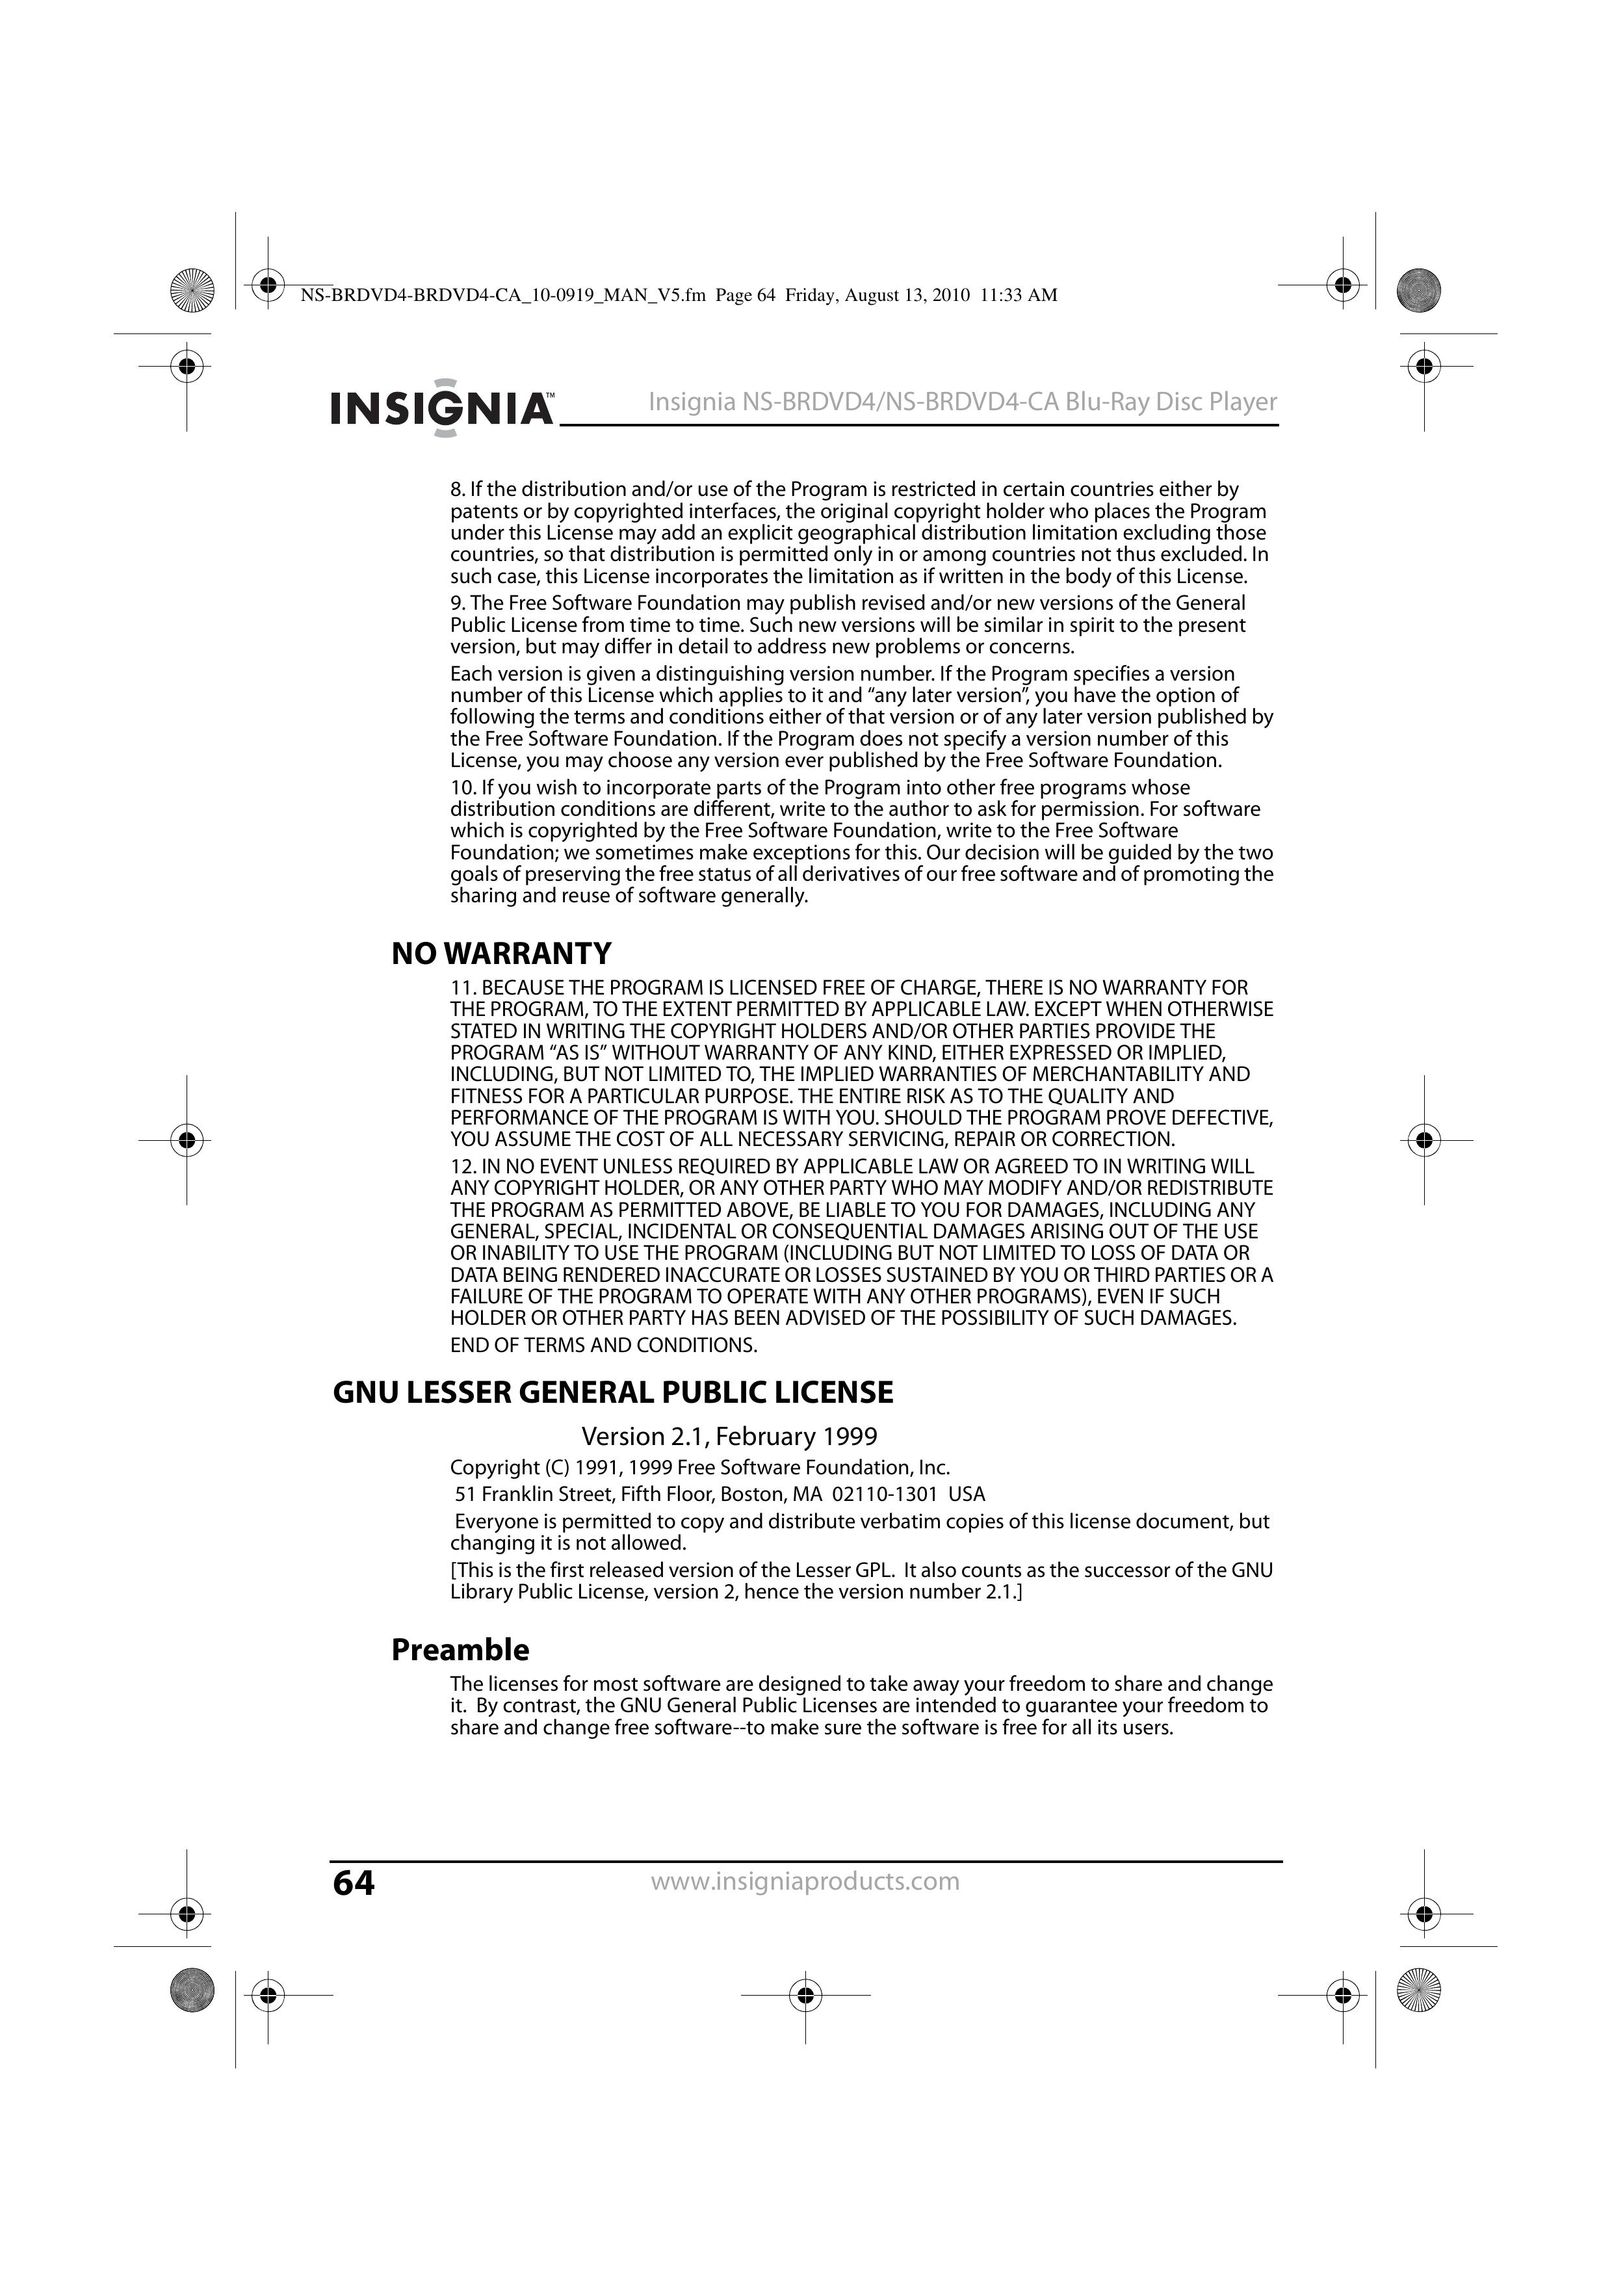 Insignia NS-BRDVD4 Blu-ray Player User Manual (Page 64)